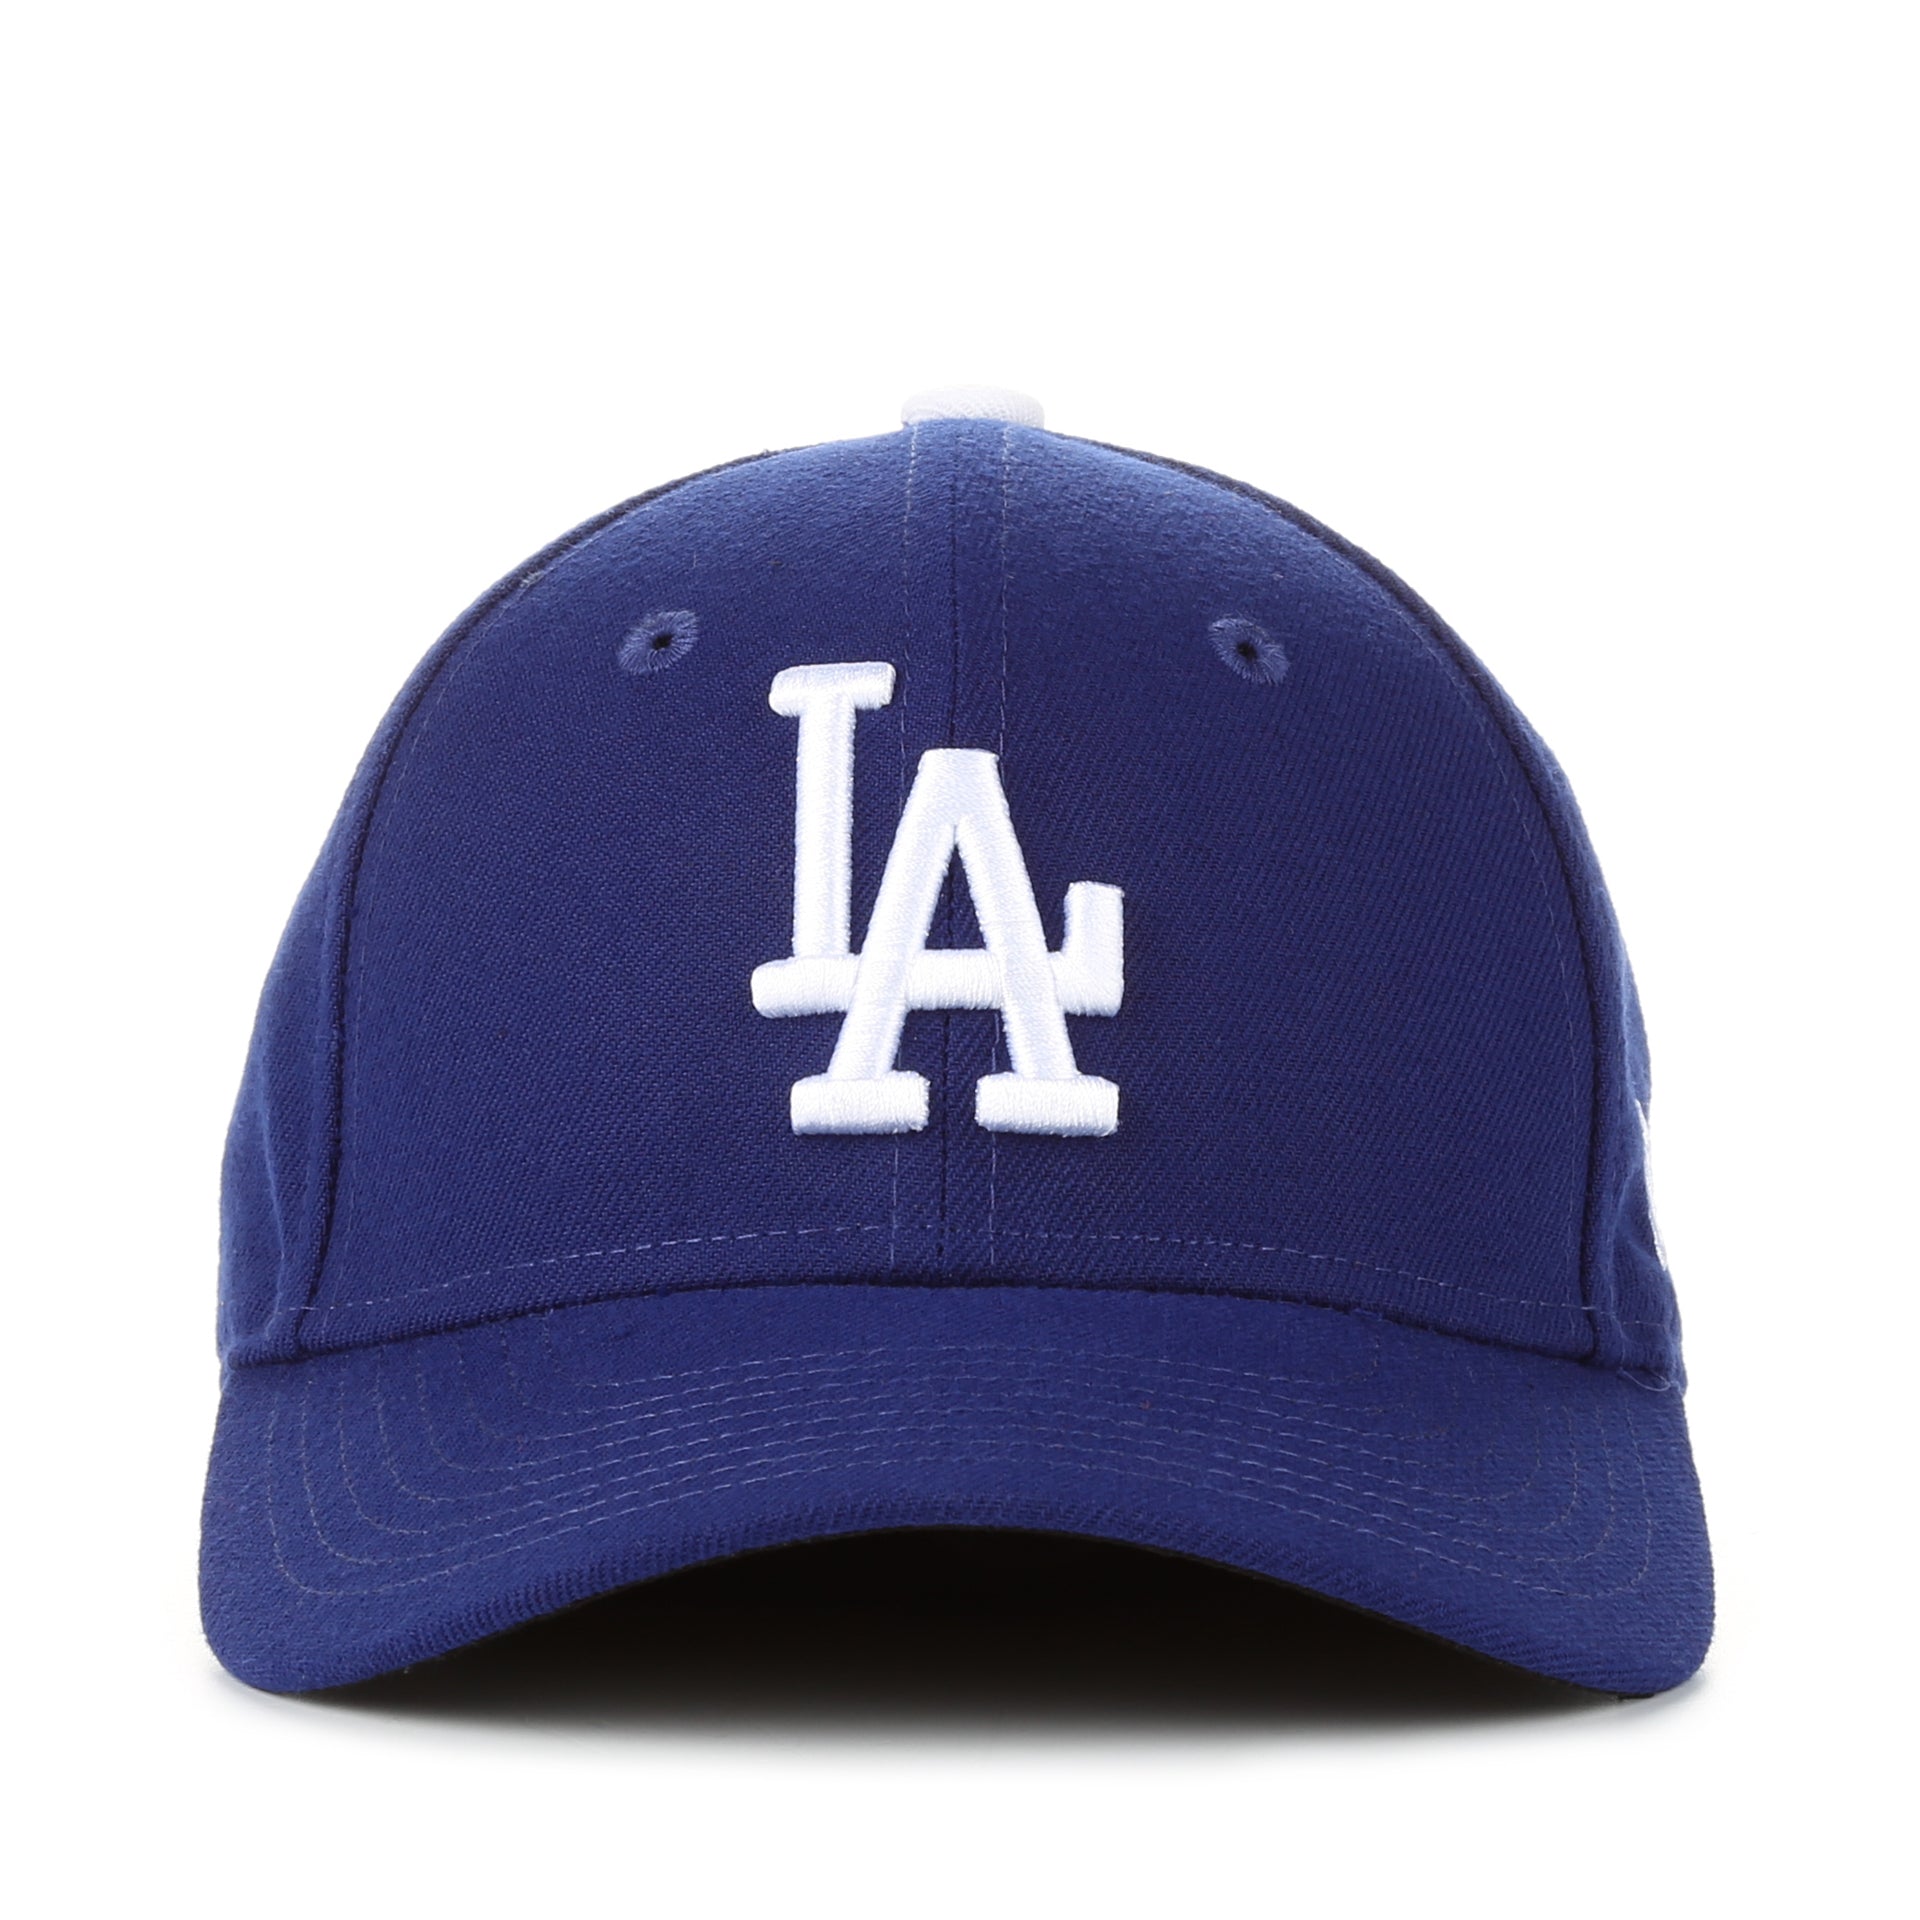 New Era 9Forty Junior The League Cap - Los Angeles Dodgers/Blue - New Star